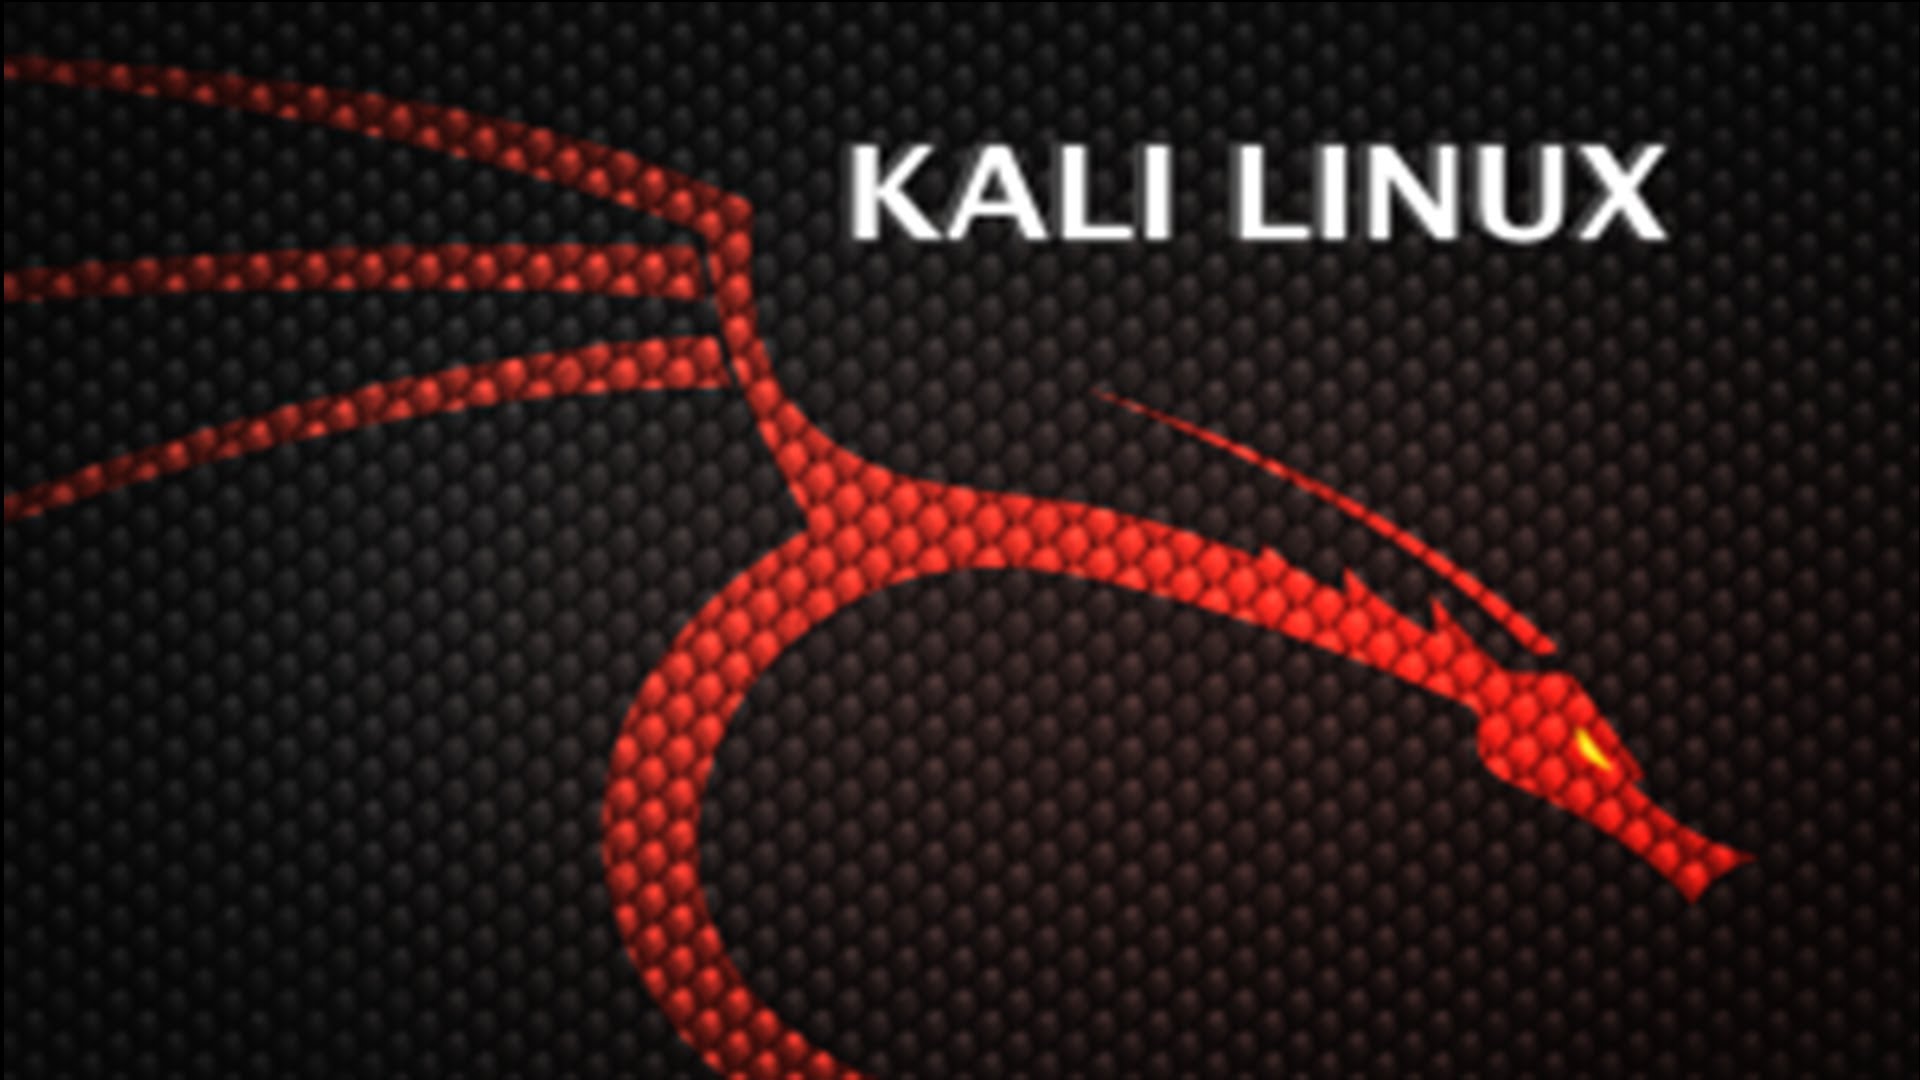 High Resolution Wallpaper | Kali Linux 1920x1080 px